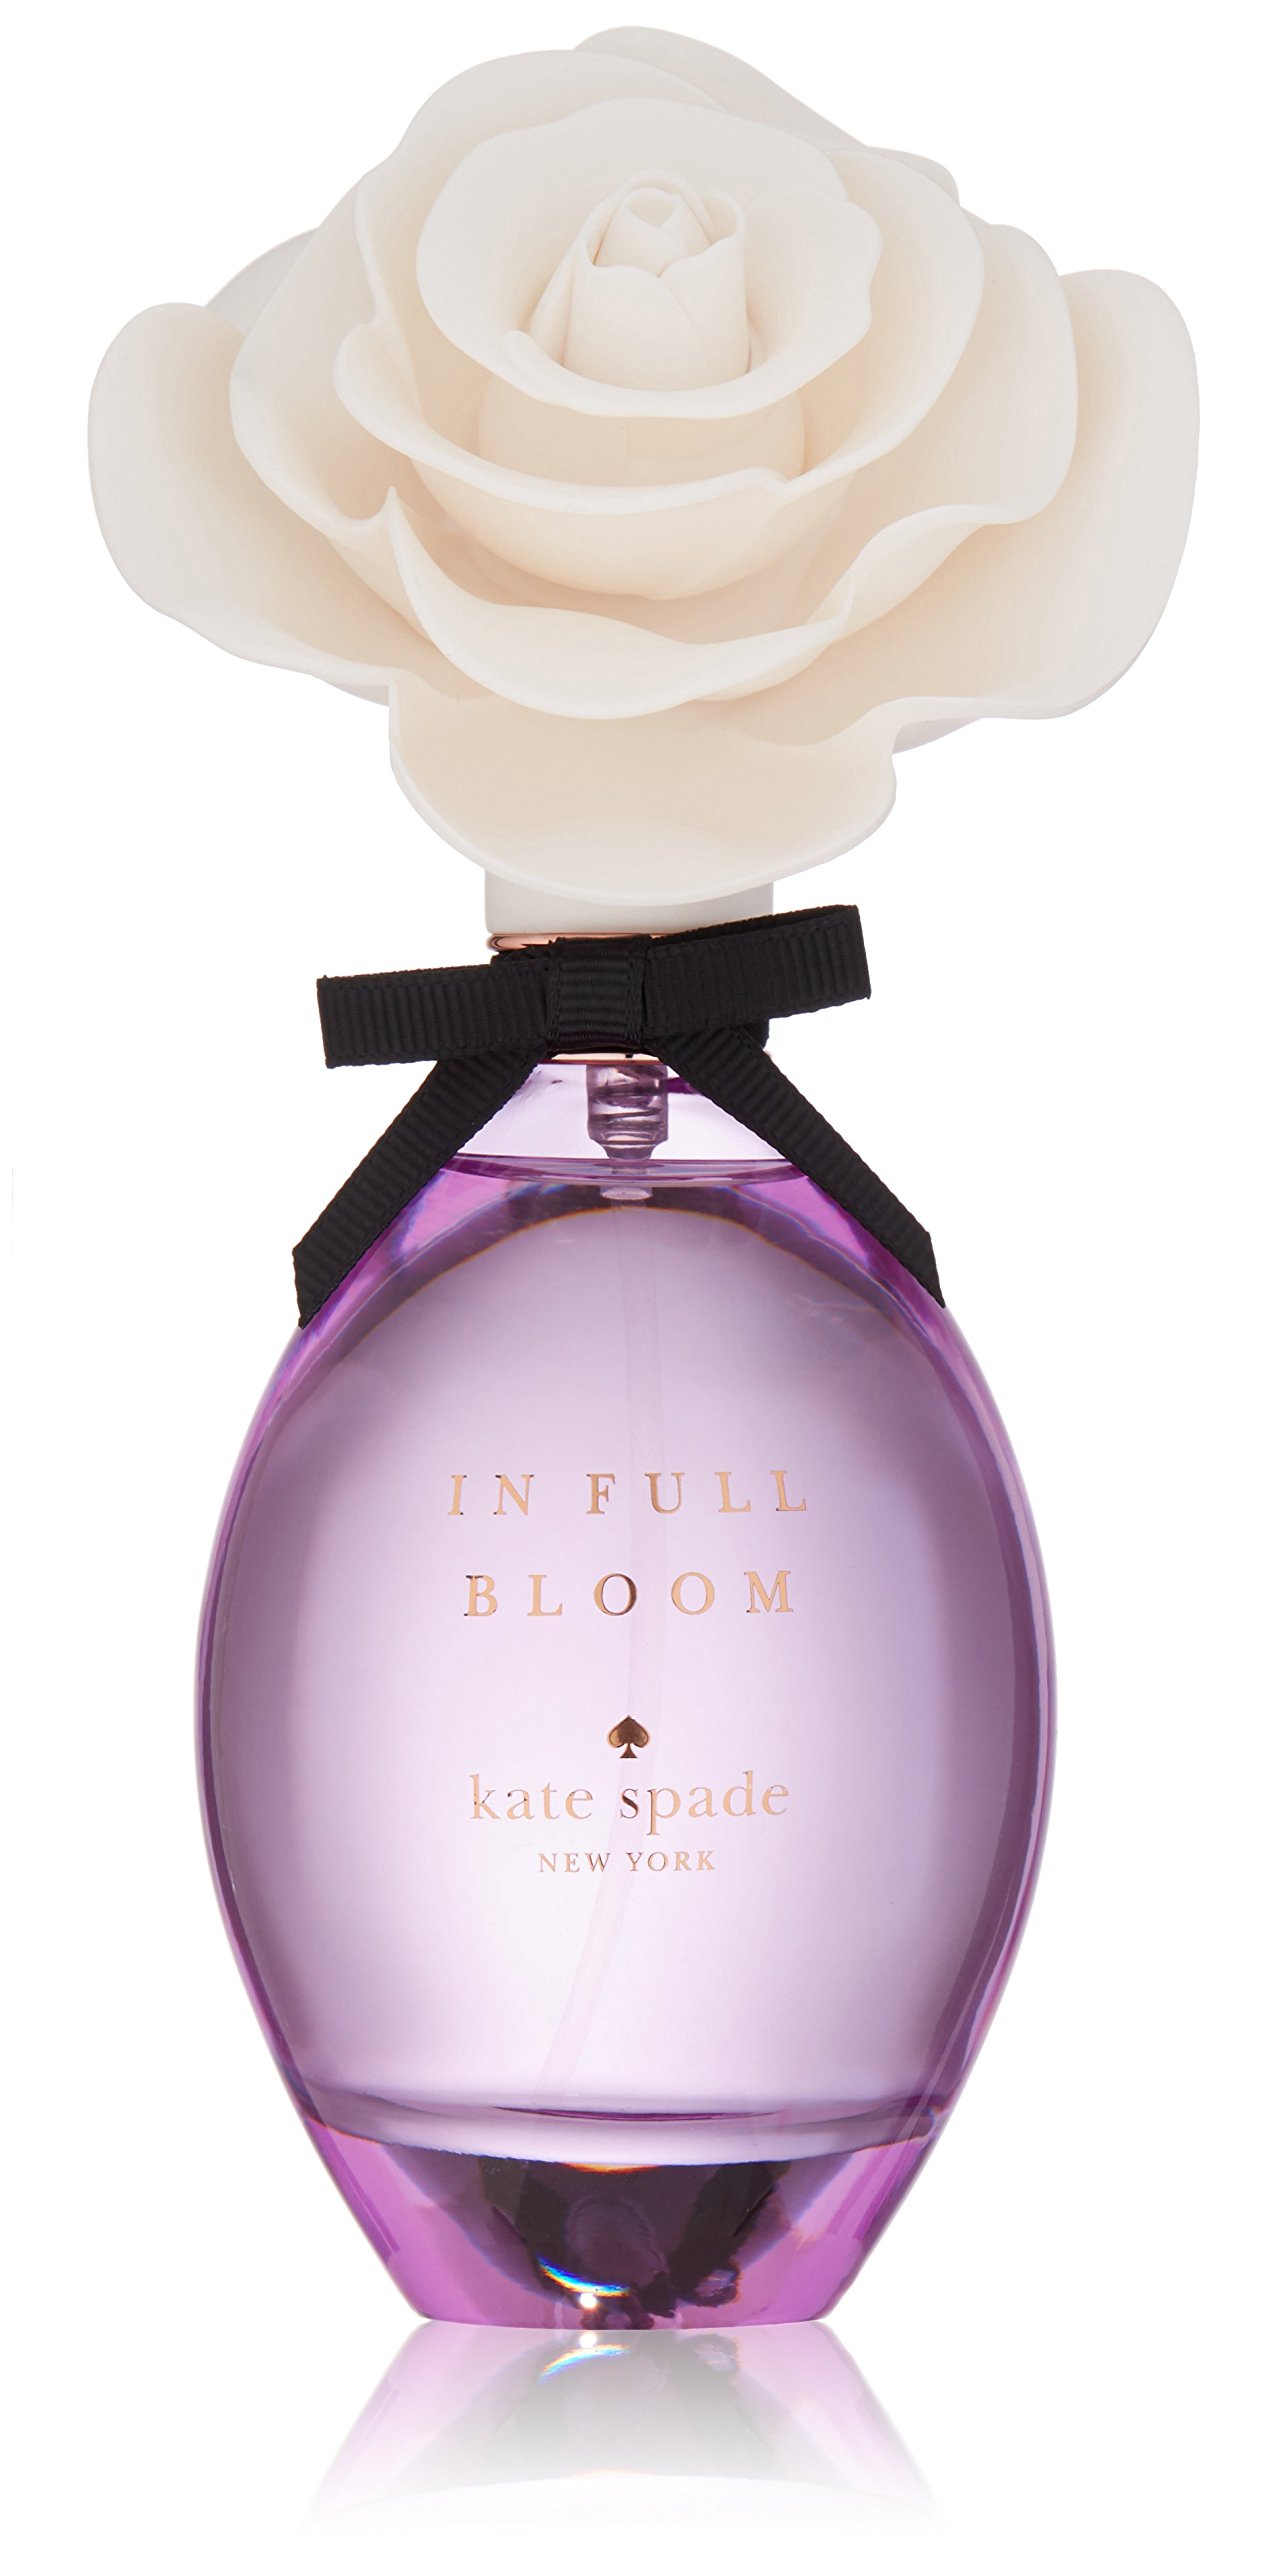 Total 39+ imagen in full bloom eau de parfum spray by kate spade